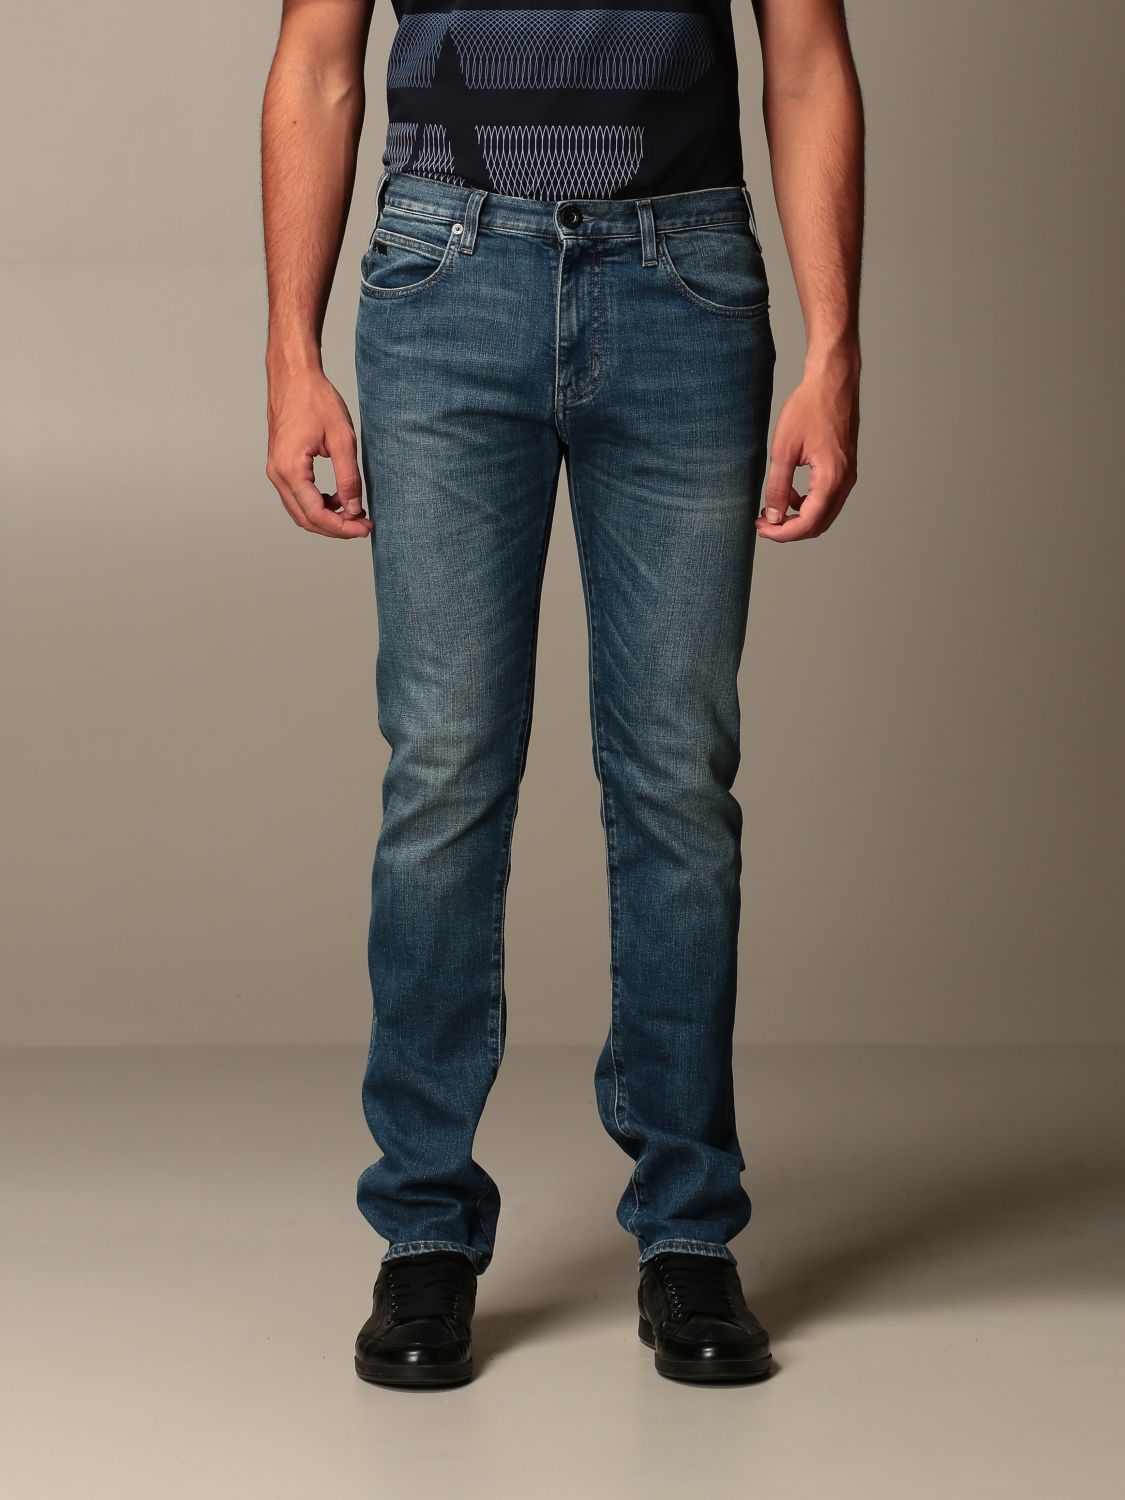 Emporio Armani Outlet: Regular fit jeans - Denim | Emporio Armani 6H1J45 1DN7Z online on GIGLIO.COM